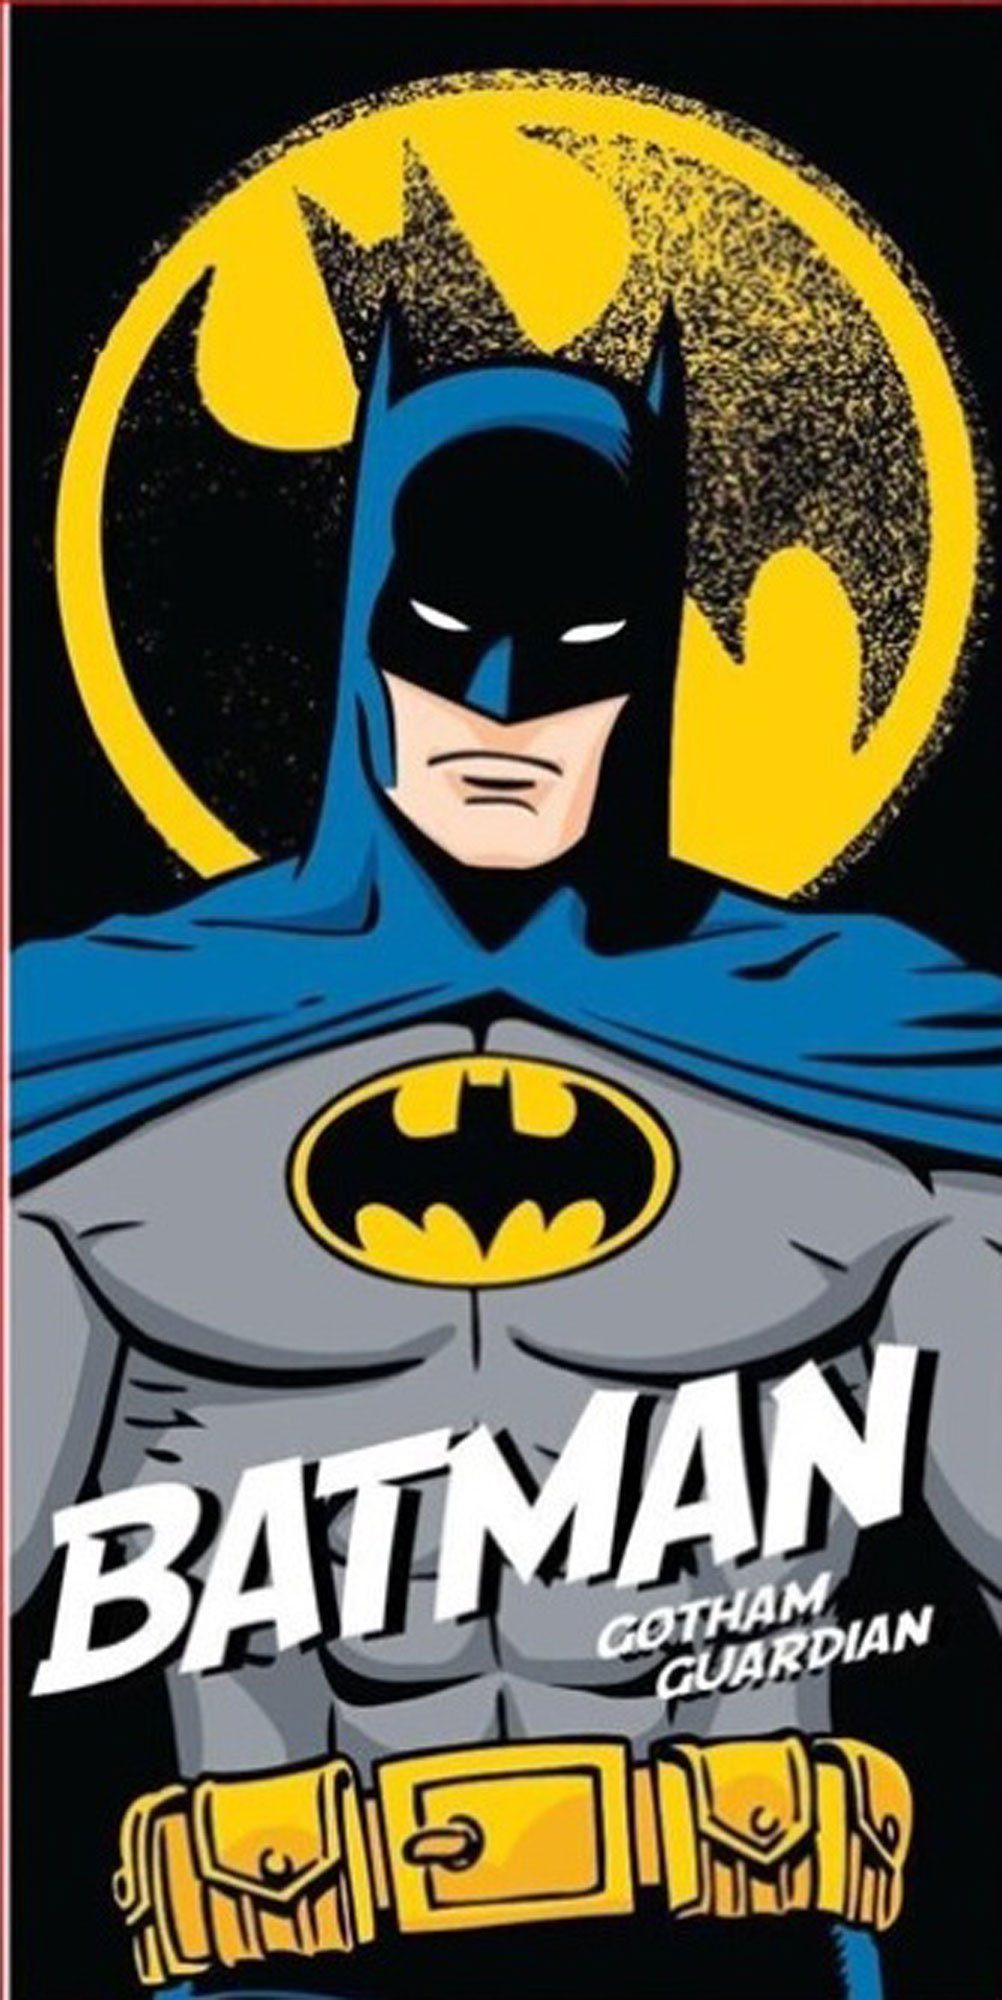 empireposter Handtuch Batman - Gotham Guardian - Mikrofaser-Handtuch 70x140 cm - Strandtuch